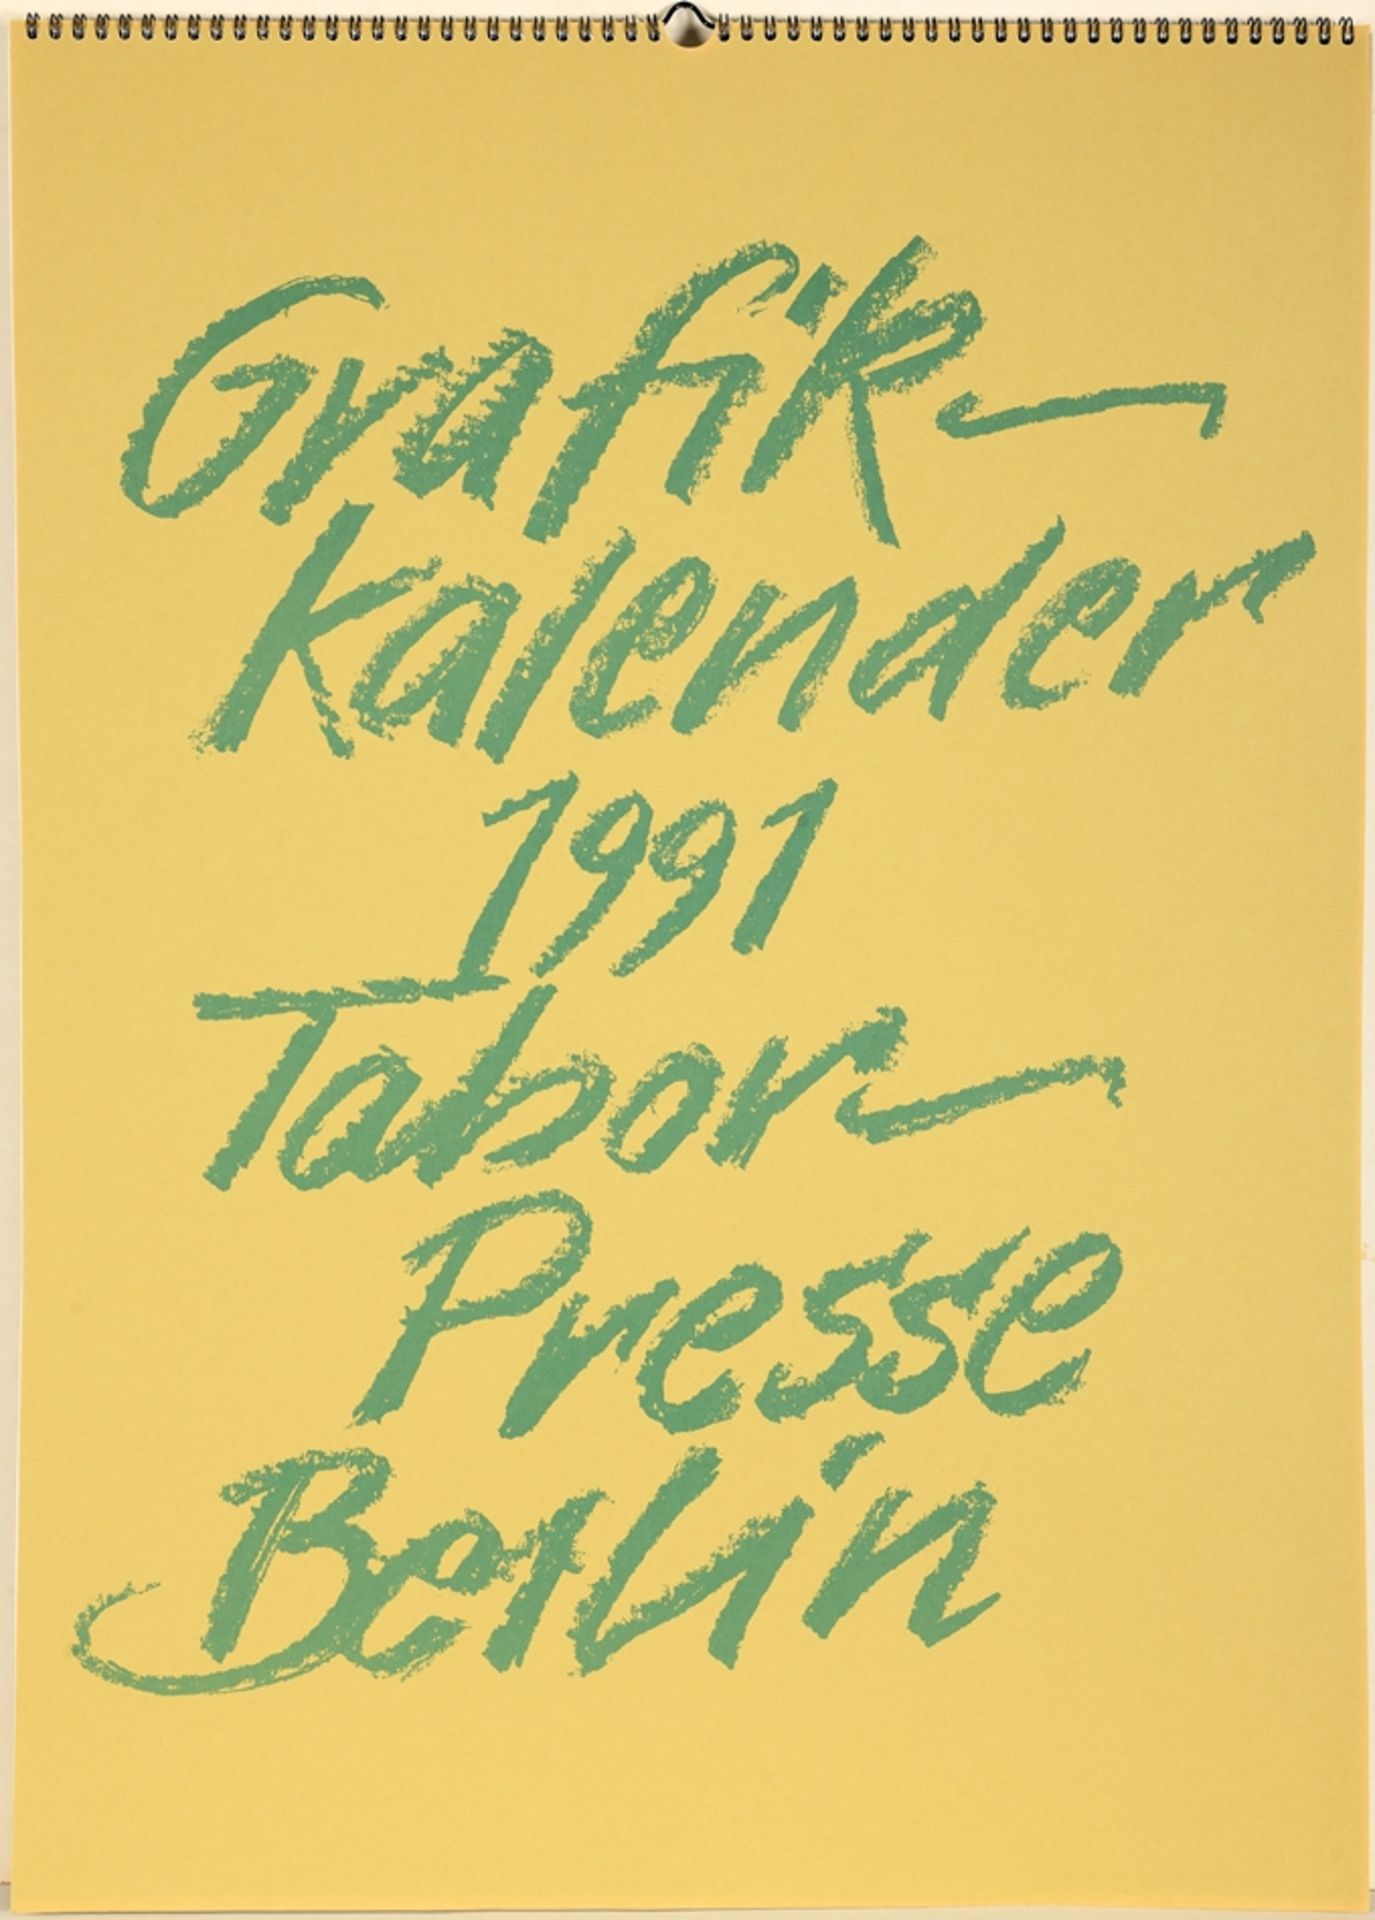 Grafik-Kalender 1991 Tabor Presse Berlin, 1990